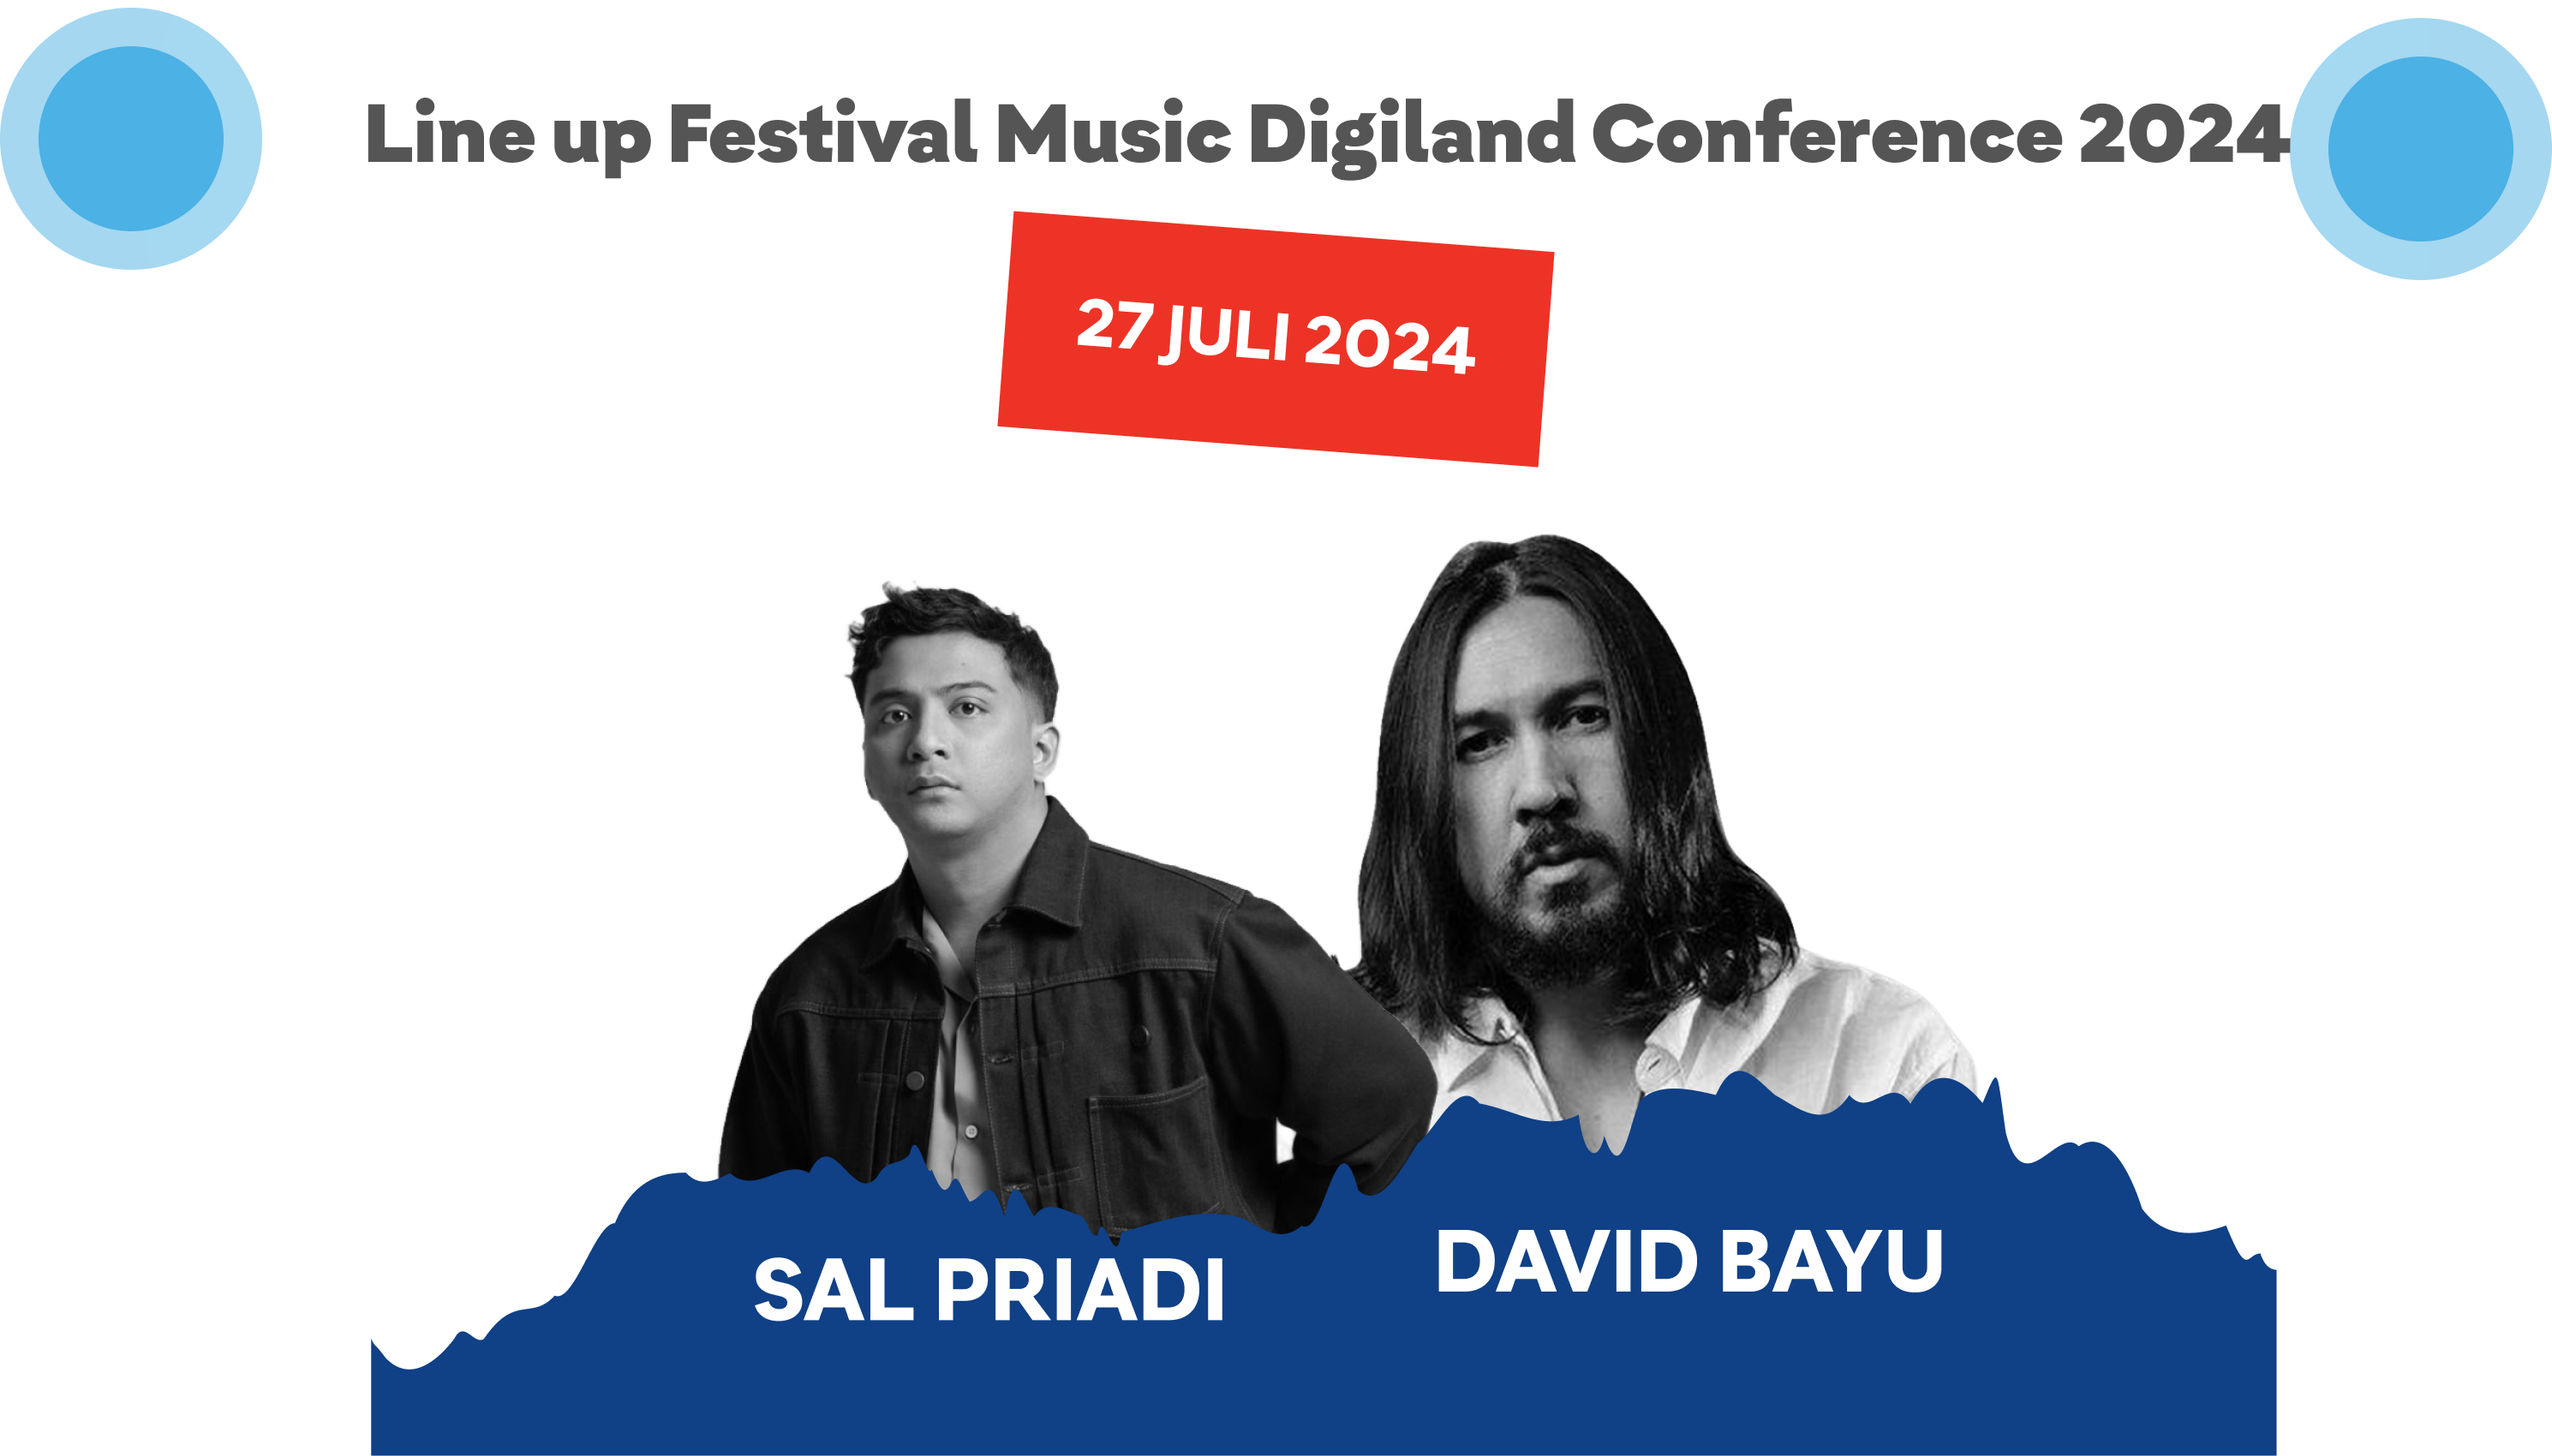 Line up Festival Music Digiland Conference 2024